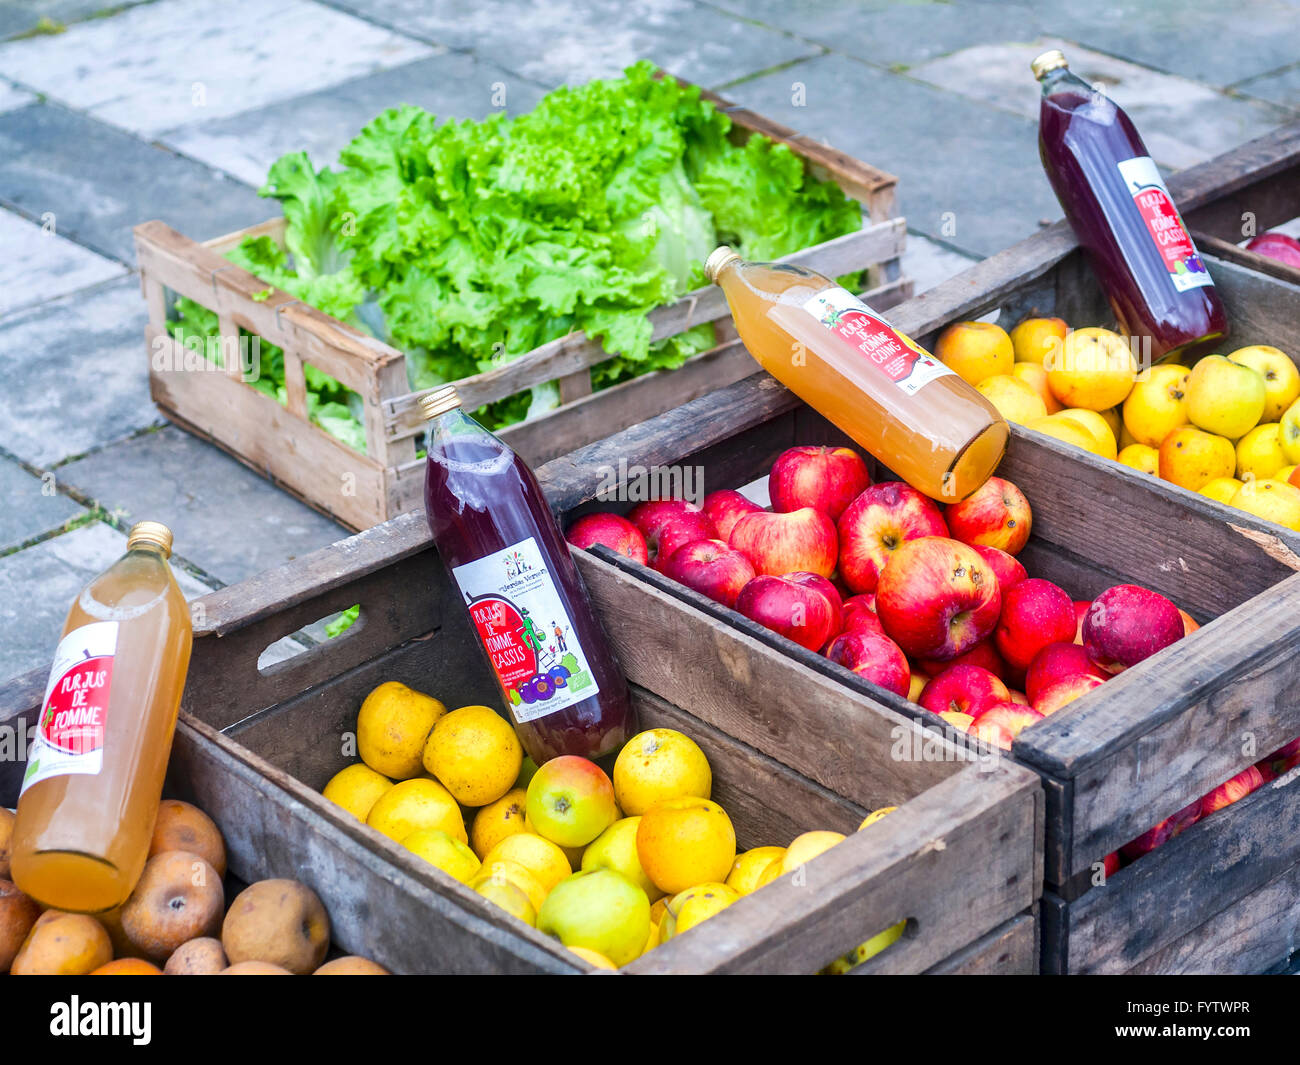 Roadside “bio” / organic food stall - France. Stock Photo